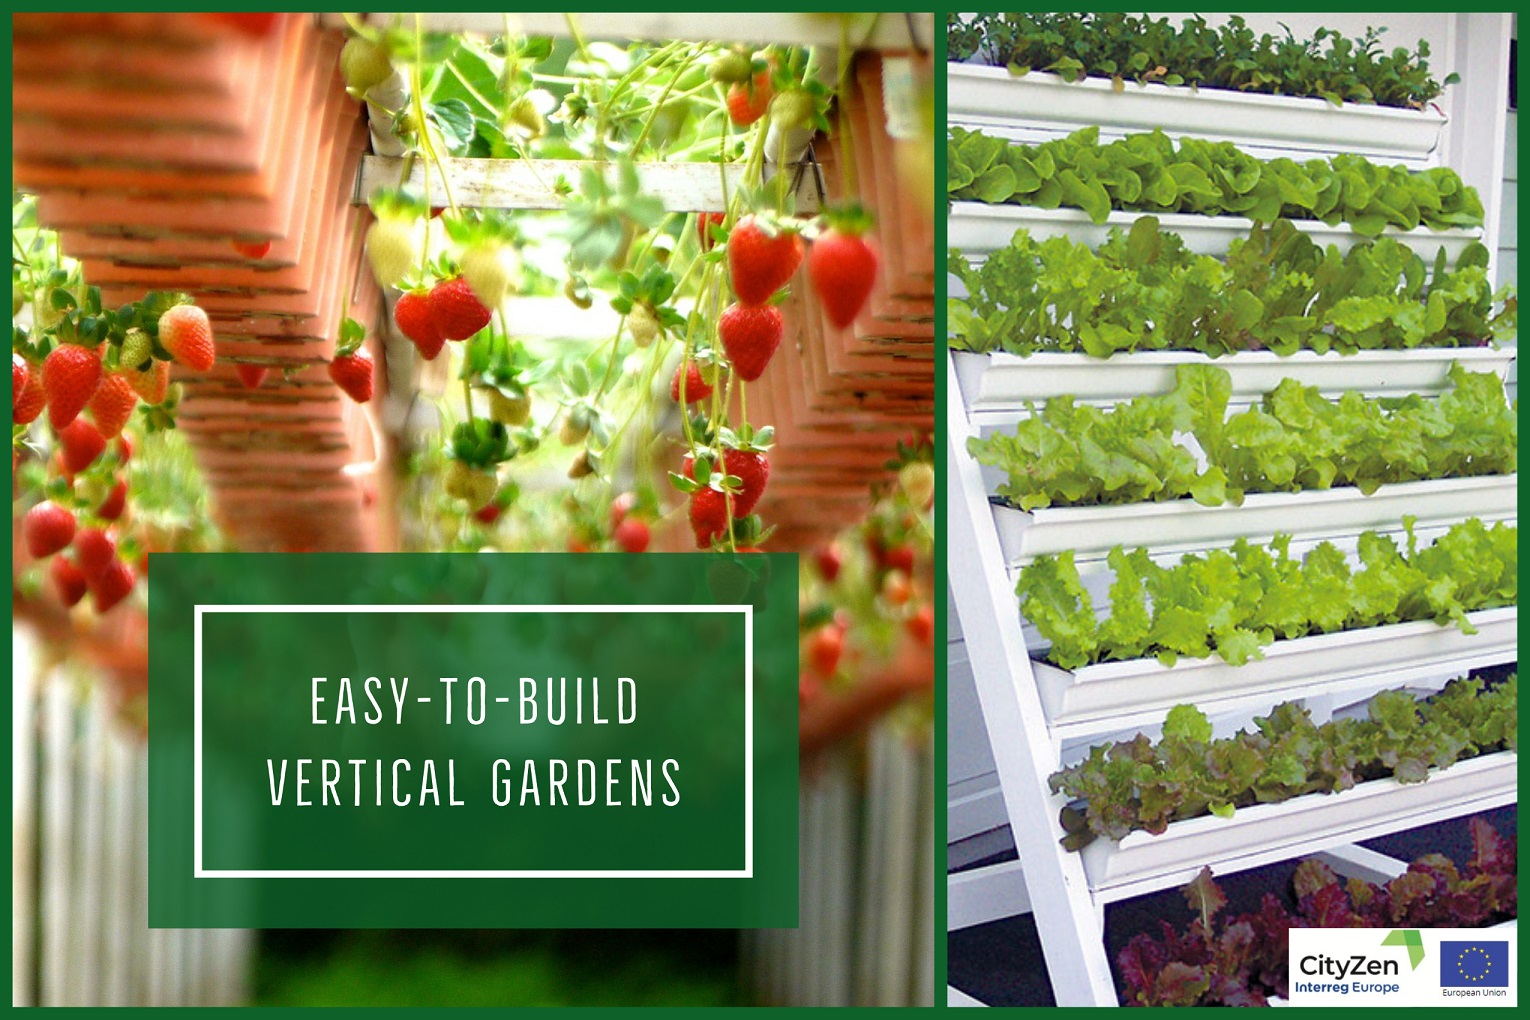 CityZen pilot to co-create DIY vertical gardens